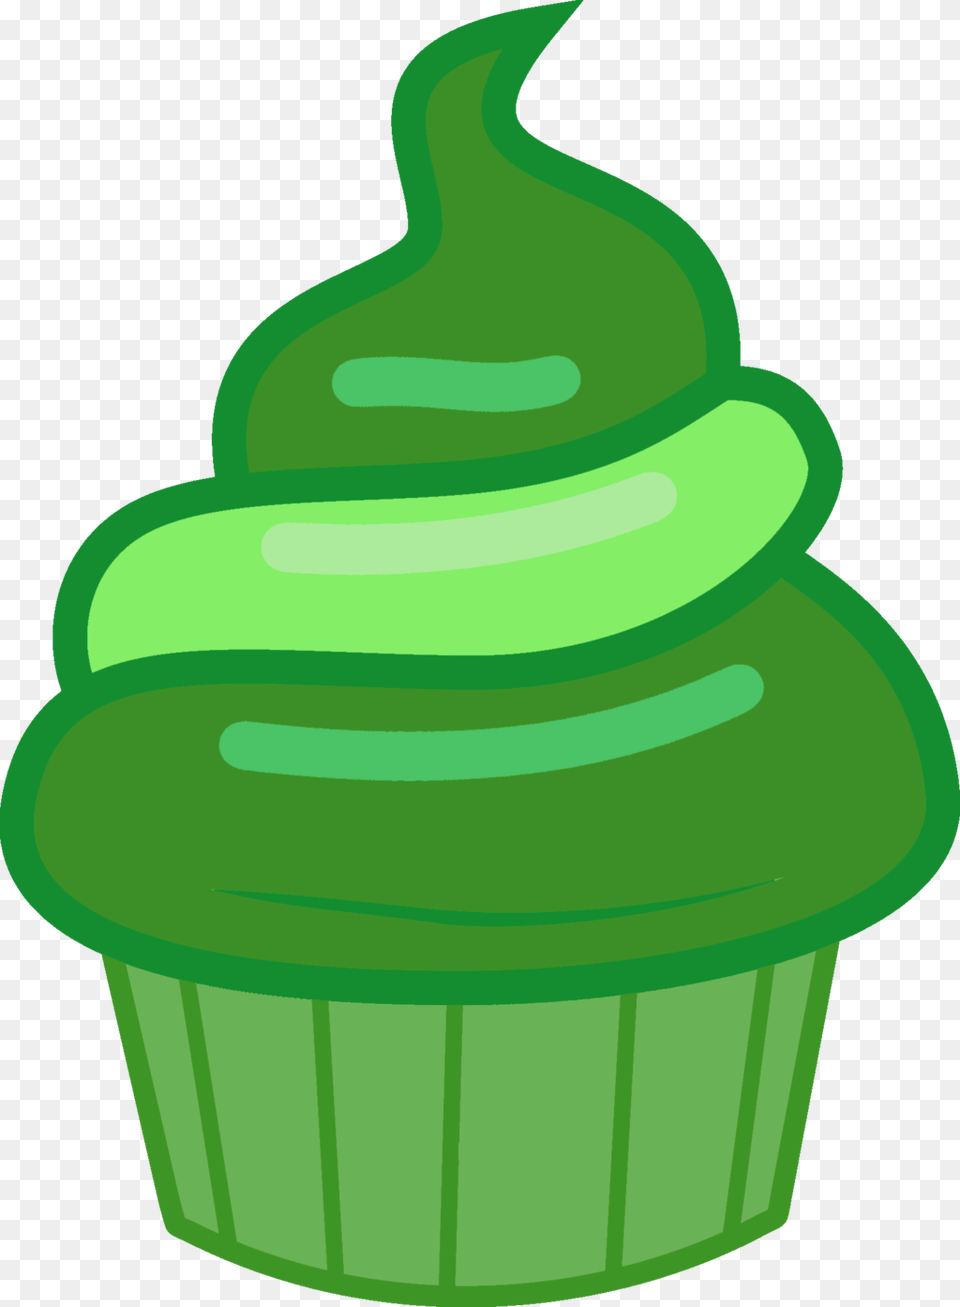 Vector Cupcake Clipart Transparent Download Mlp Cupcakes Cutie Mark, Food, Cake, Cream, Dessert Png Image